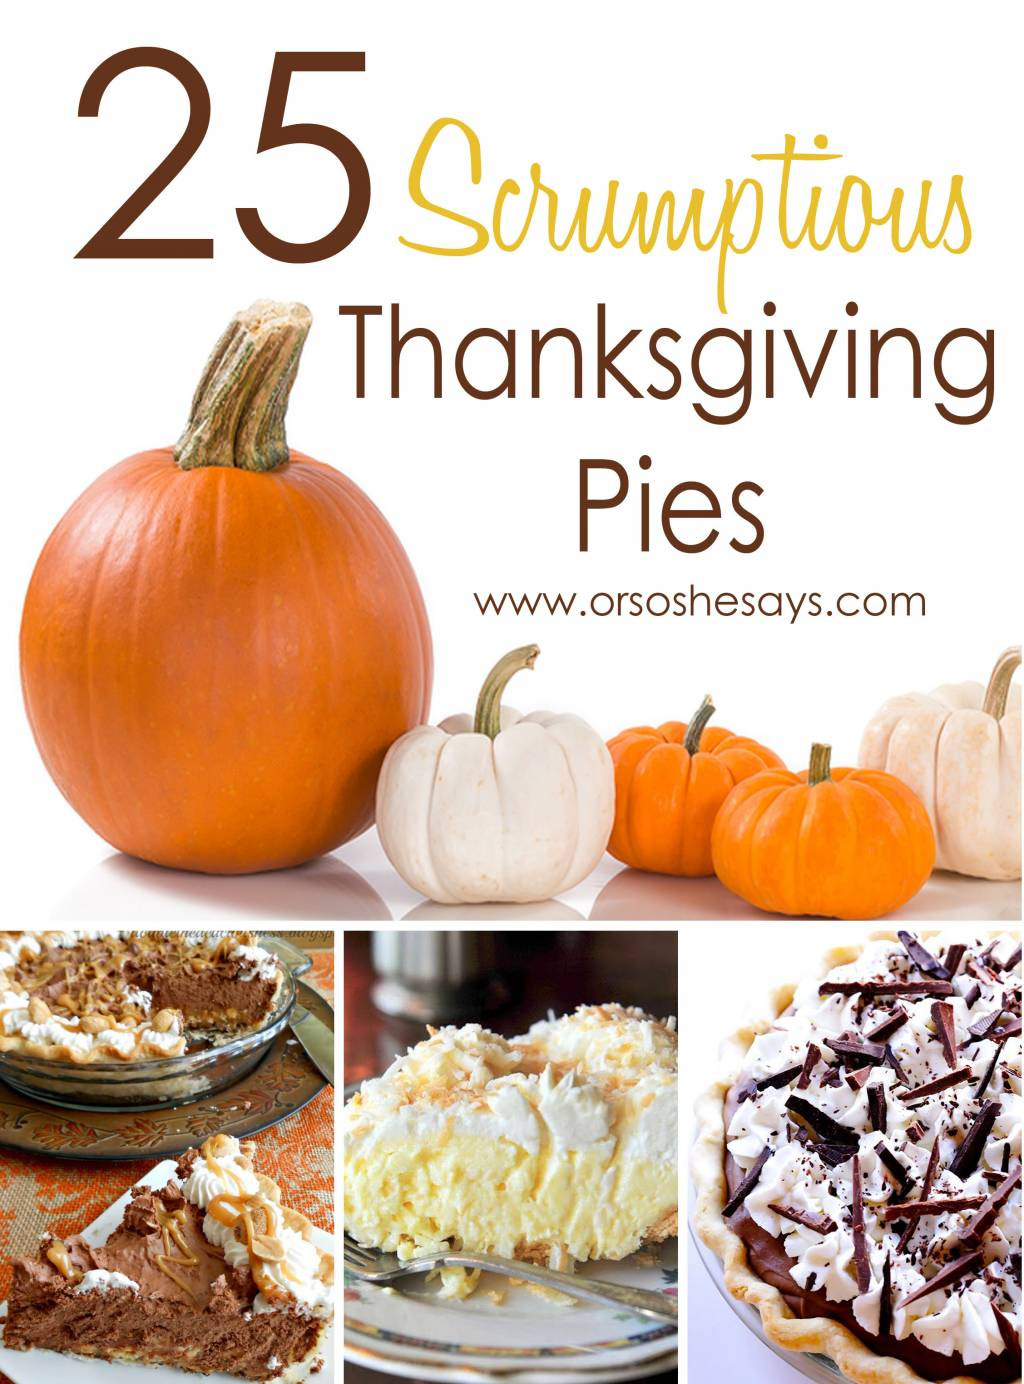 Pies For Thanksgiving
 25 Scrumptious Thanksgiving Pies she Mariah so she